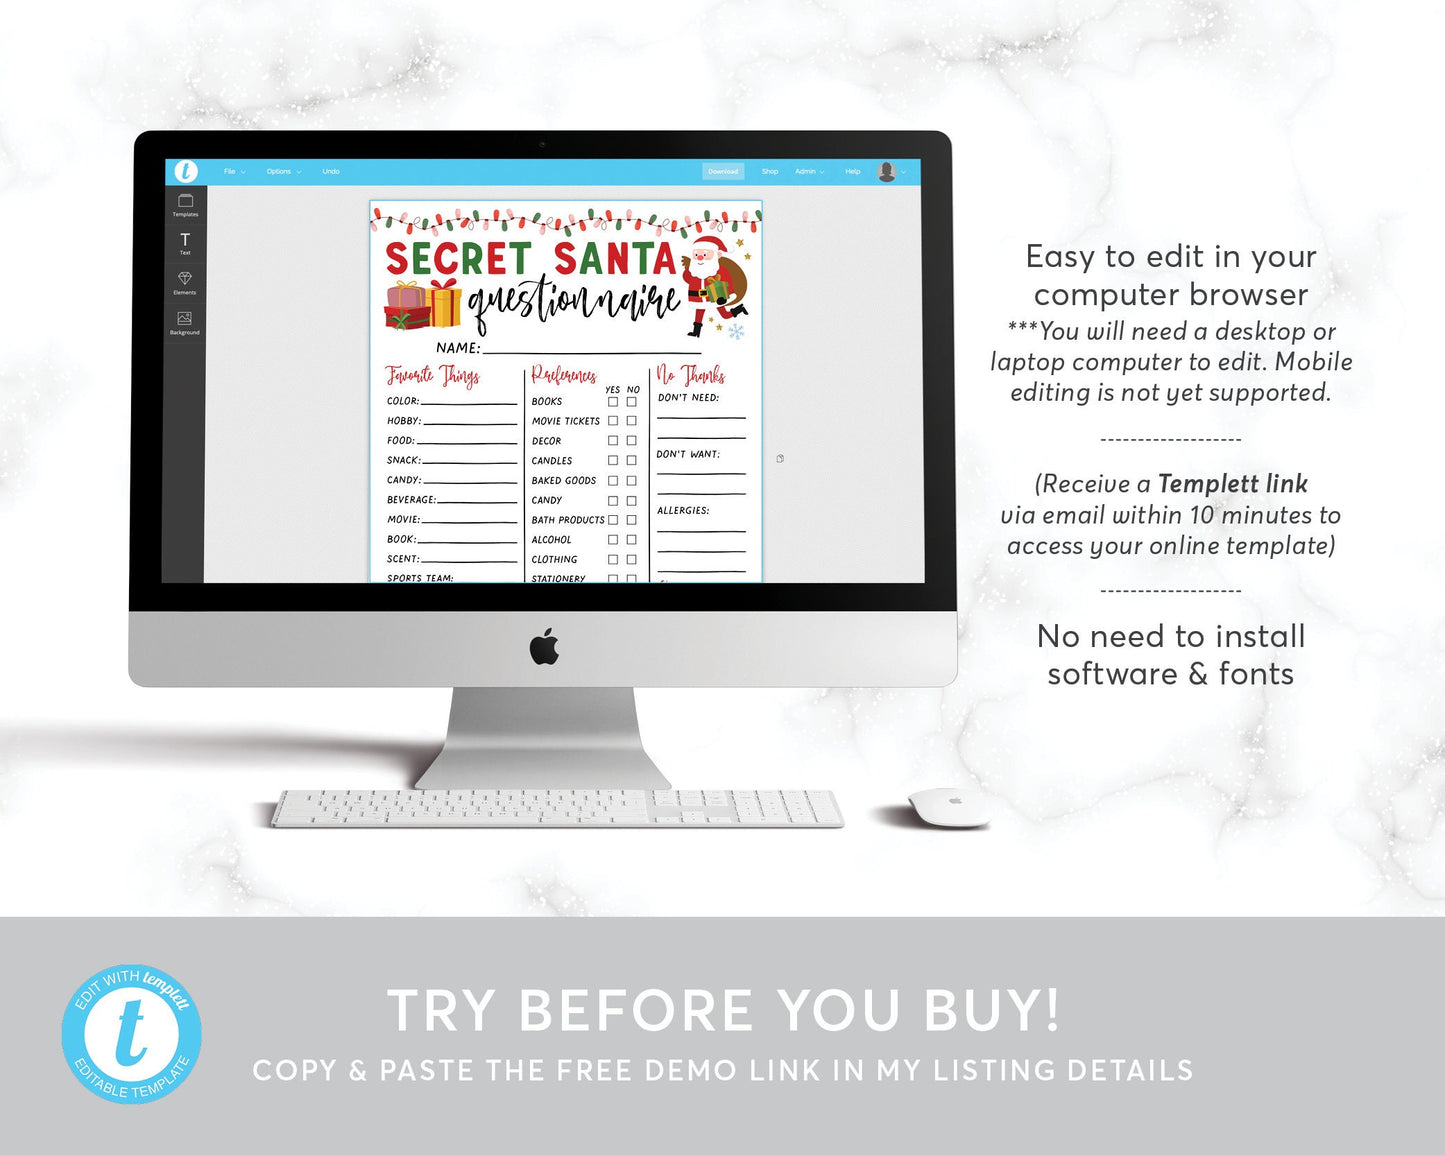 Secret Santa Questionnaire Editable Template, Holiday Christmas Gift Exchange Form Wish List Printable, Work Office Secret Santa Party Games